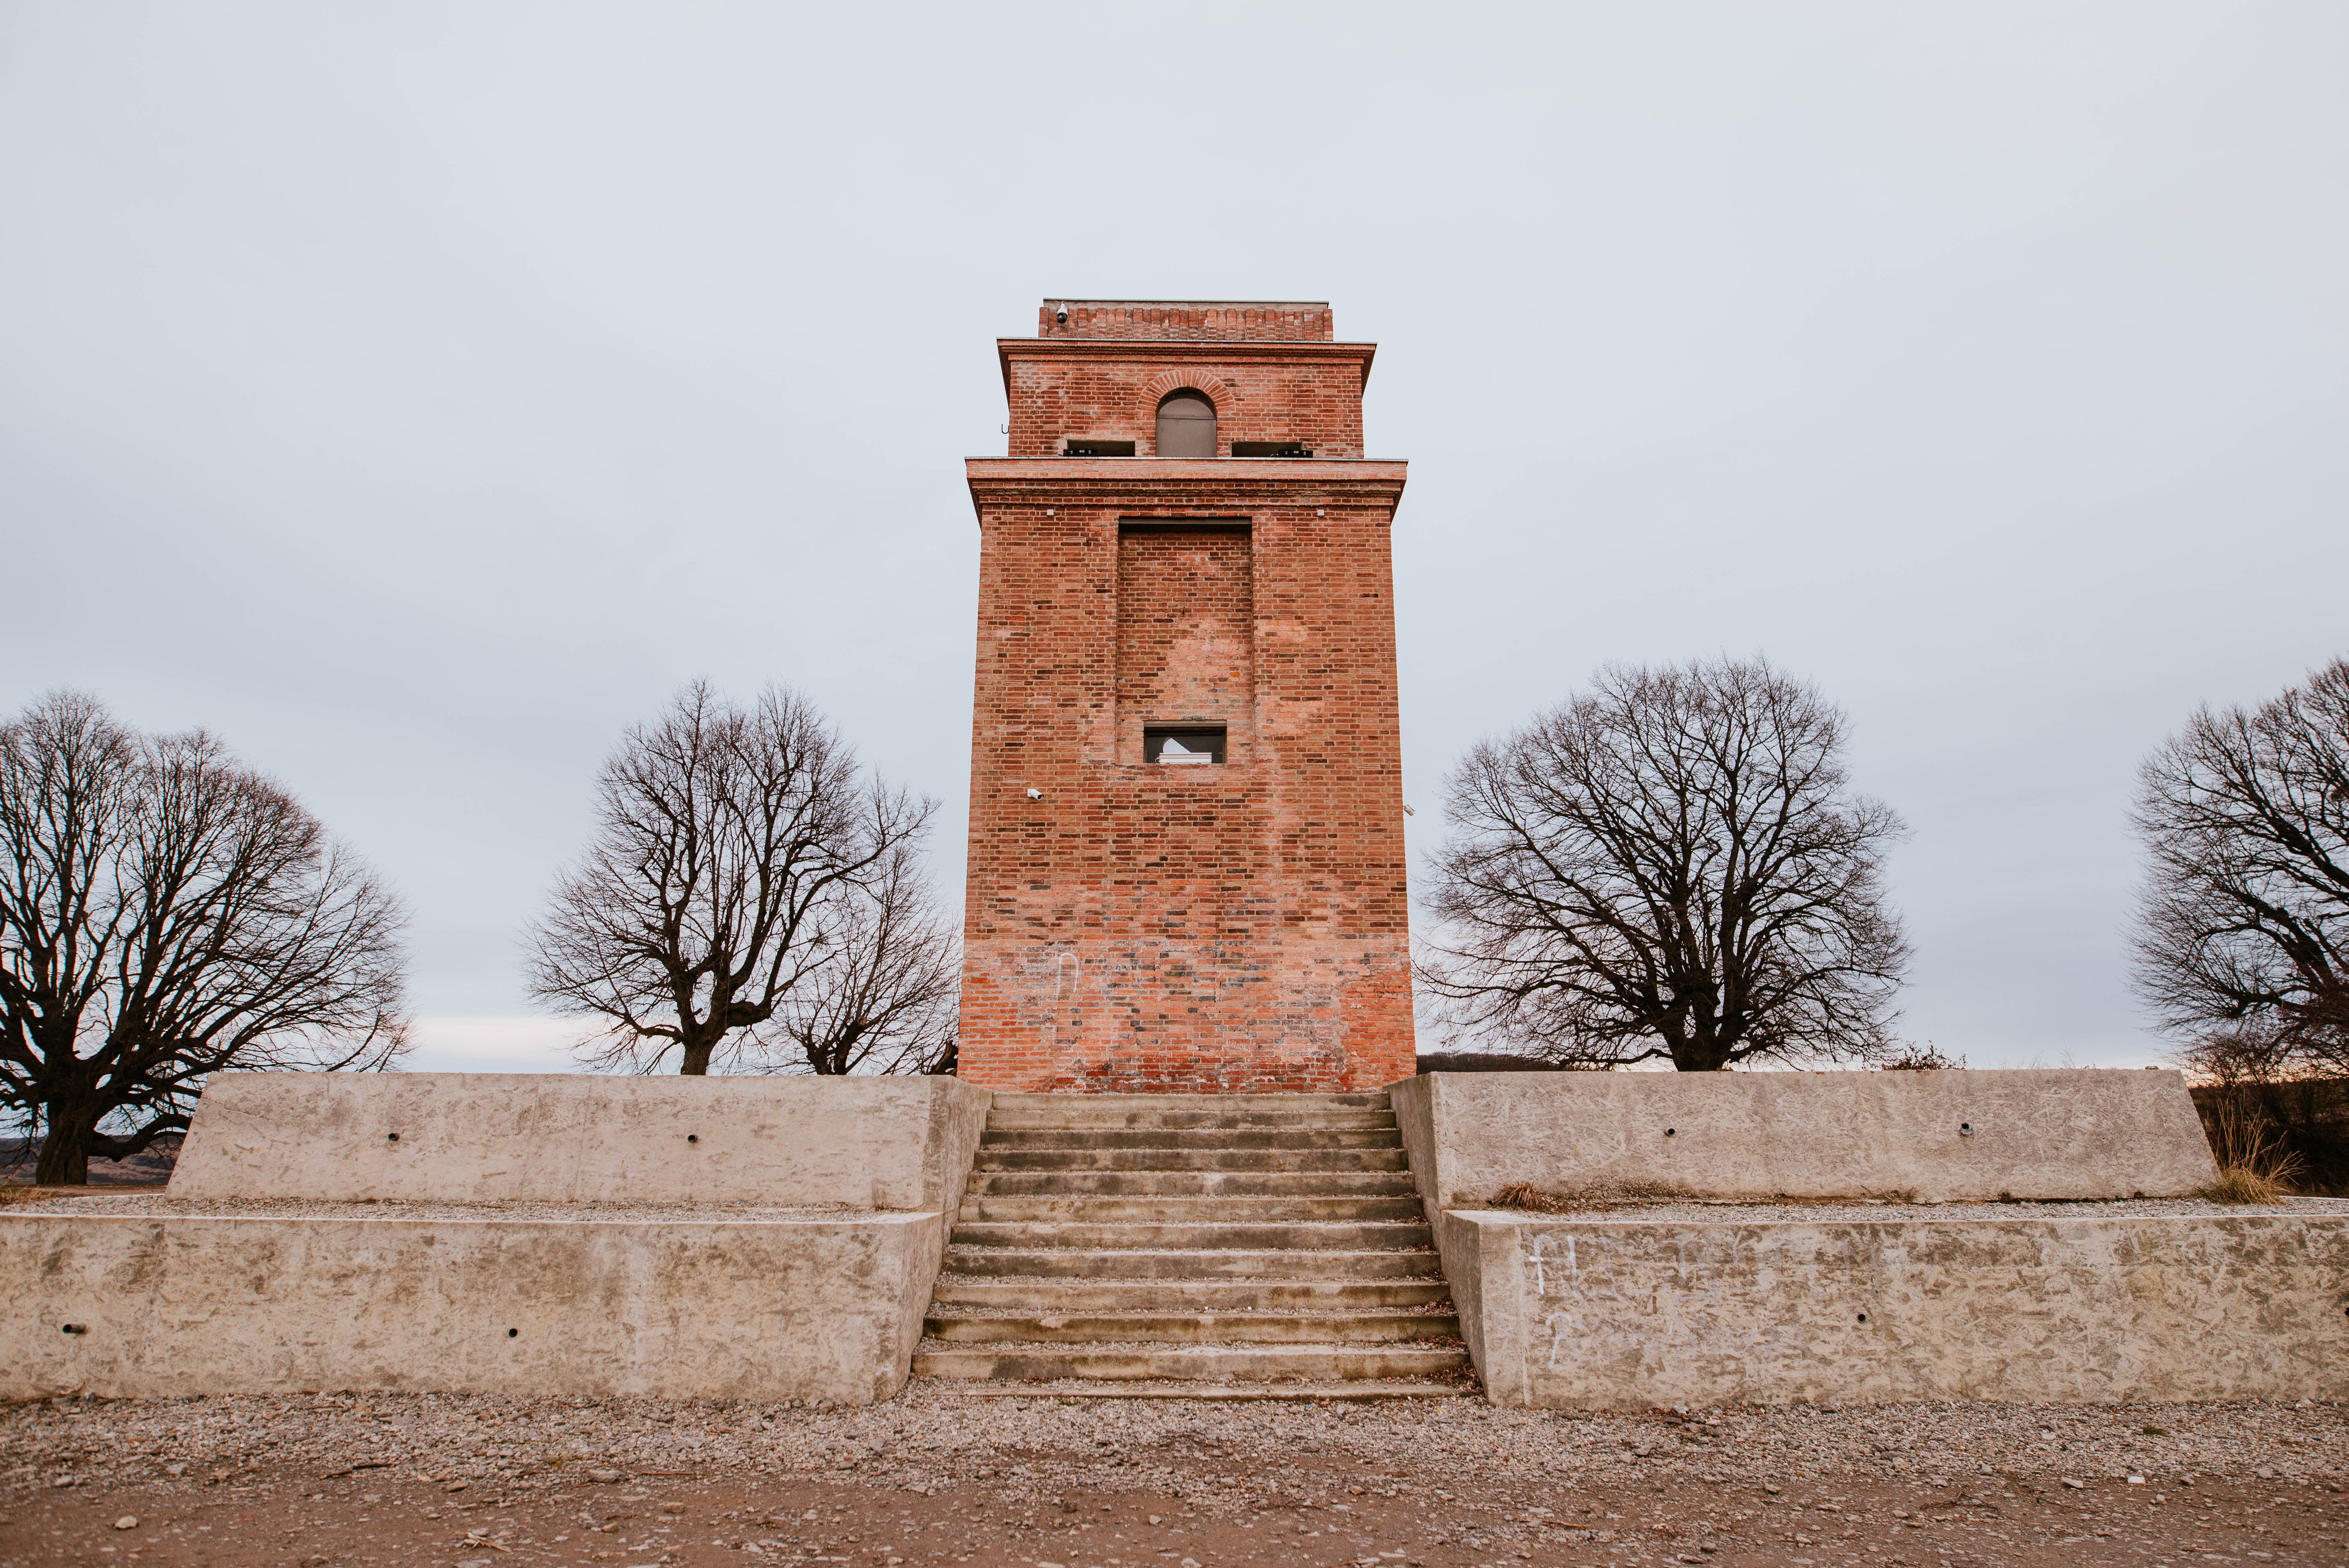 Walking through GușterLand - The Memorial Tower